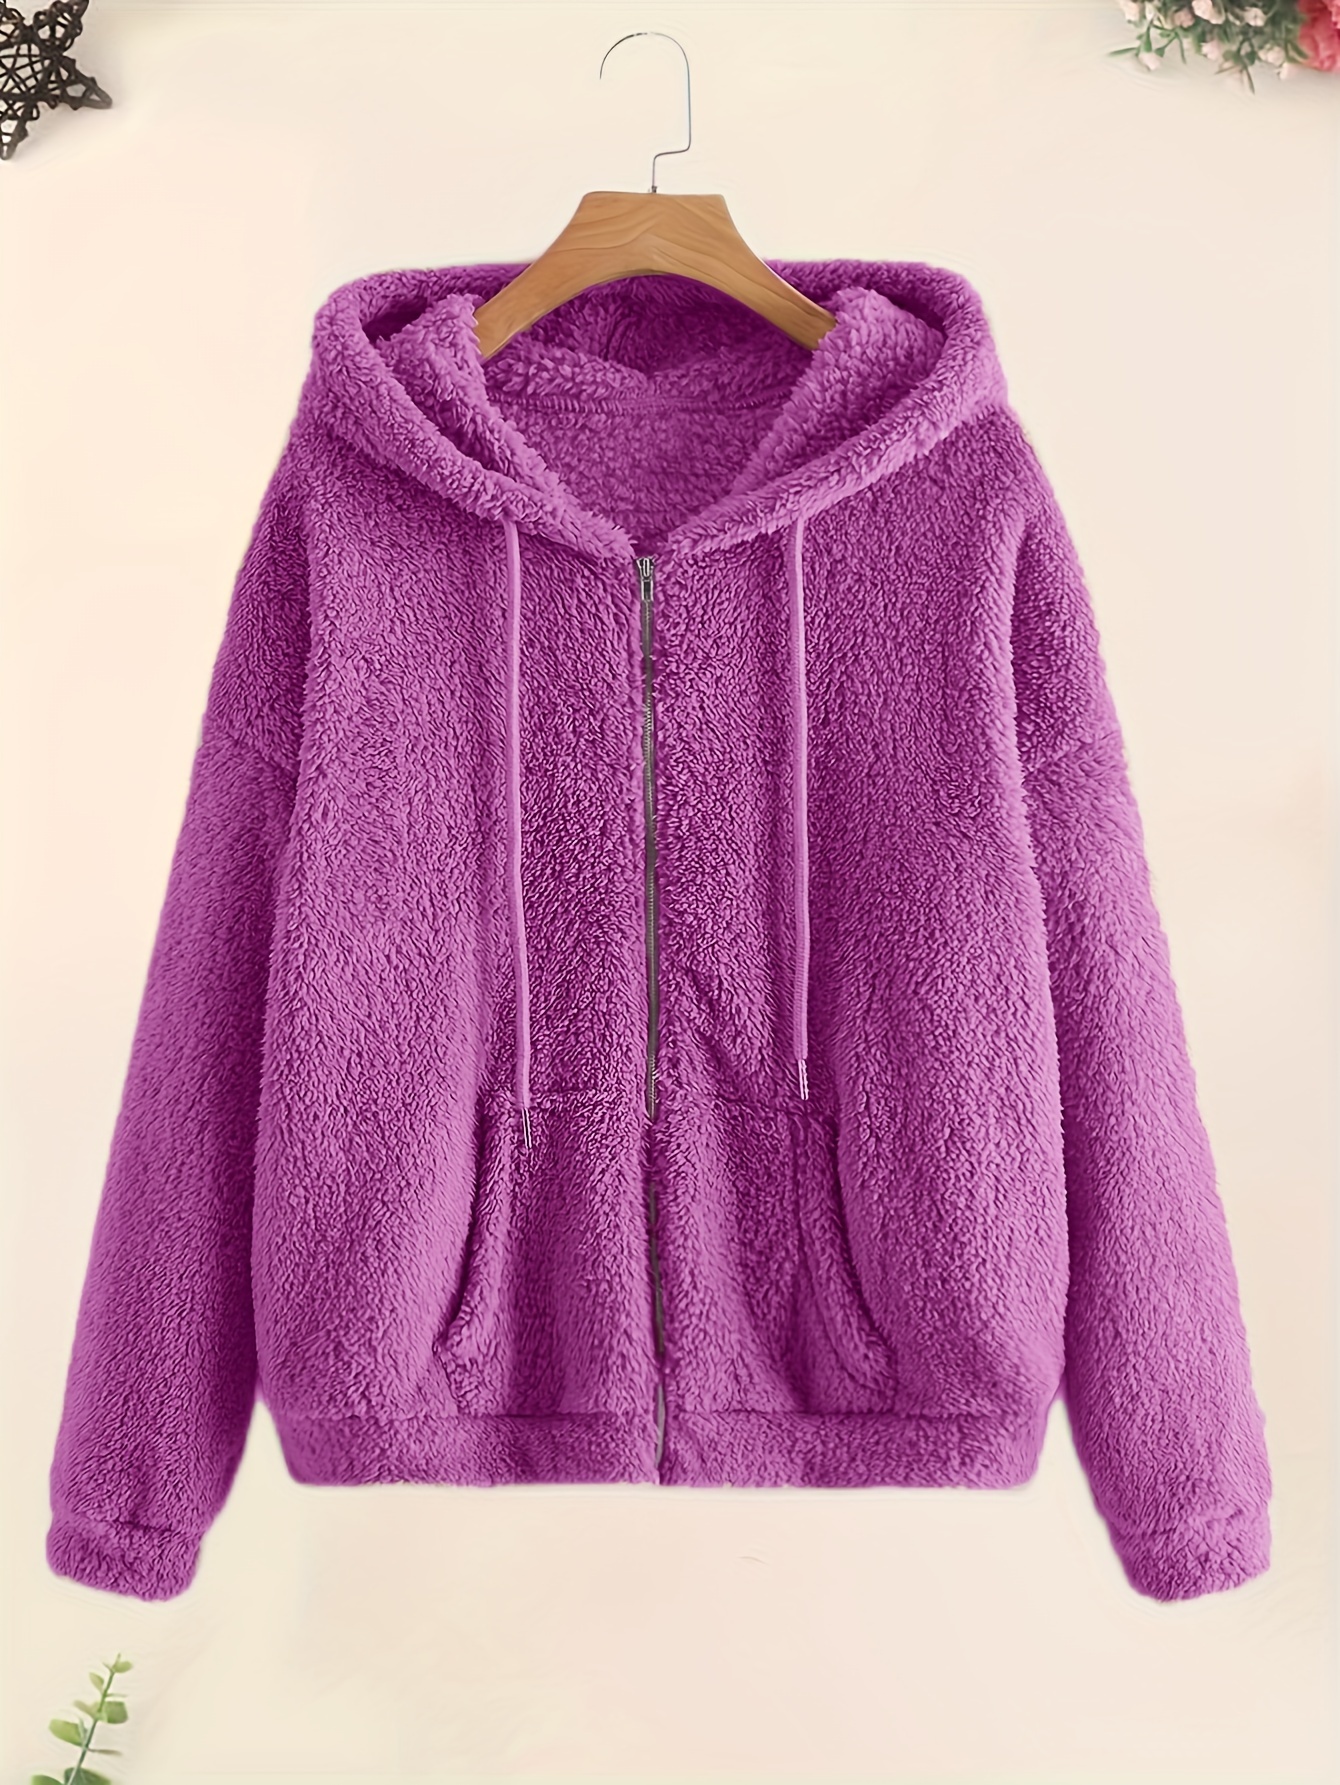  Ruziyoog Women's Cotton Linen Hoodies Casual Long Sleeve  Drawstring Hooded Sweatshirt Button Lightweight Jacket with Pocket Purple :  Sports & Outdoors